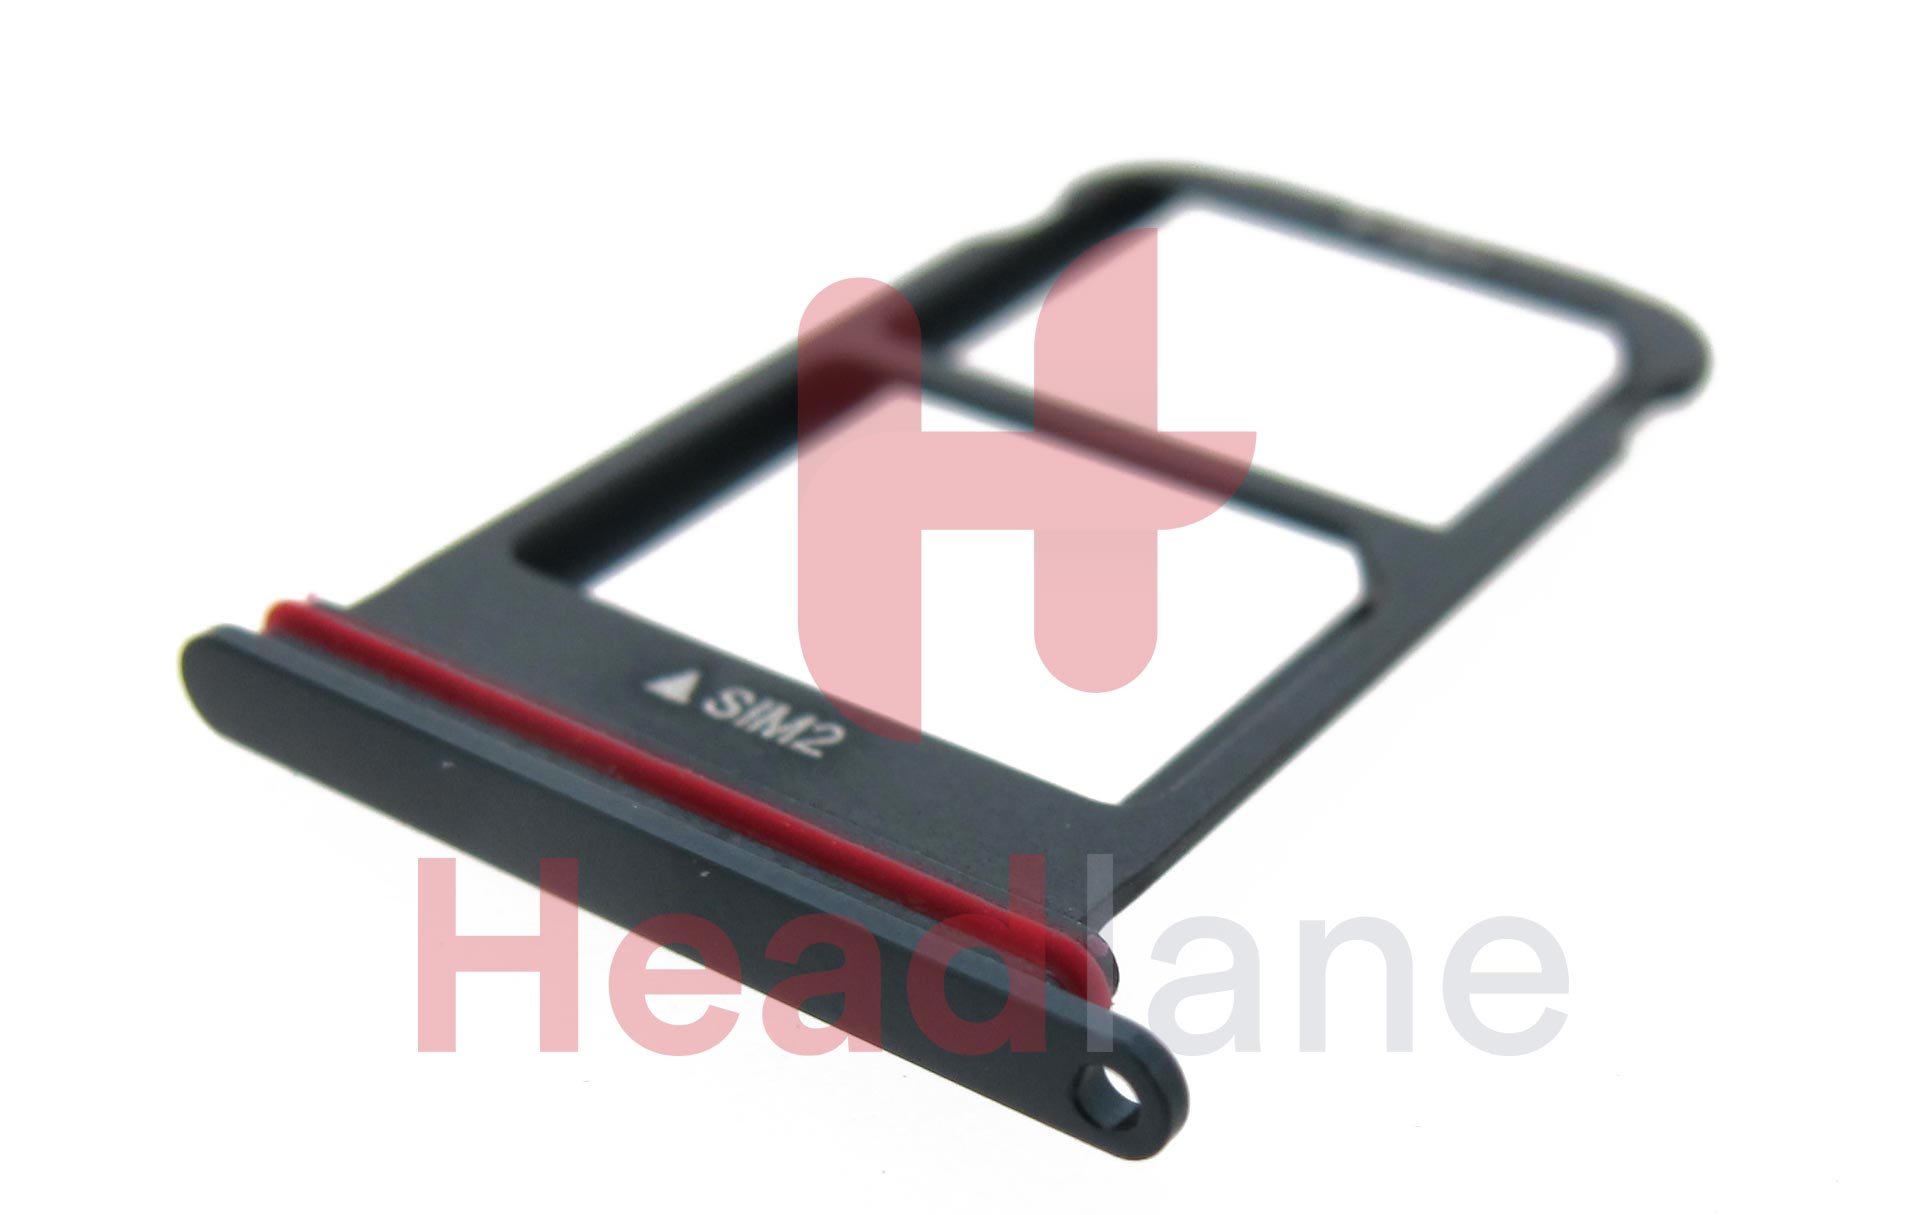 Huawei Mate 10 Pro Dual SIM Card Tray - Midnight Blue